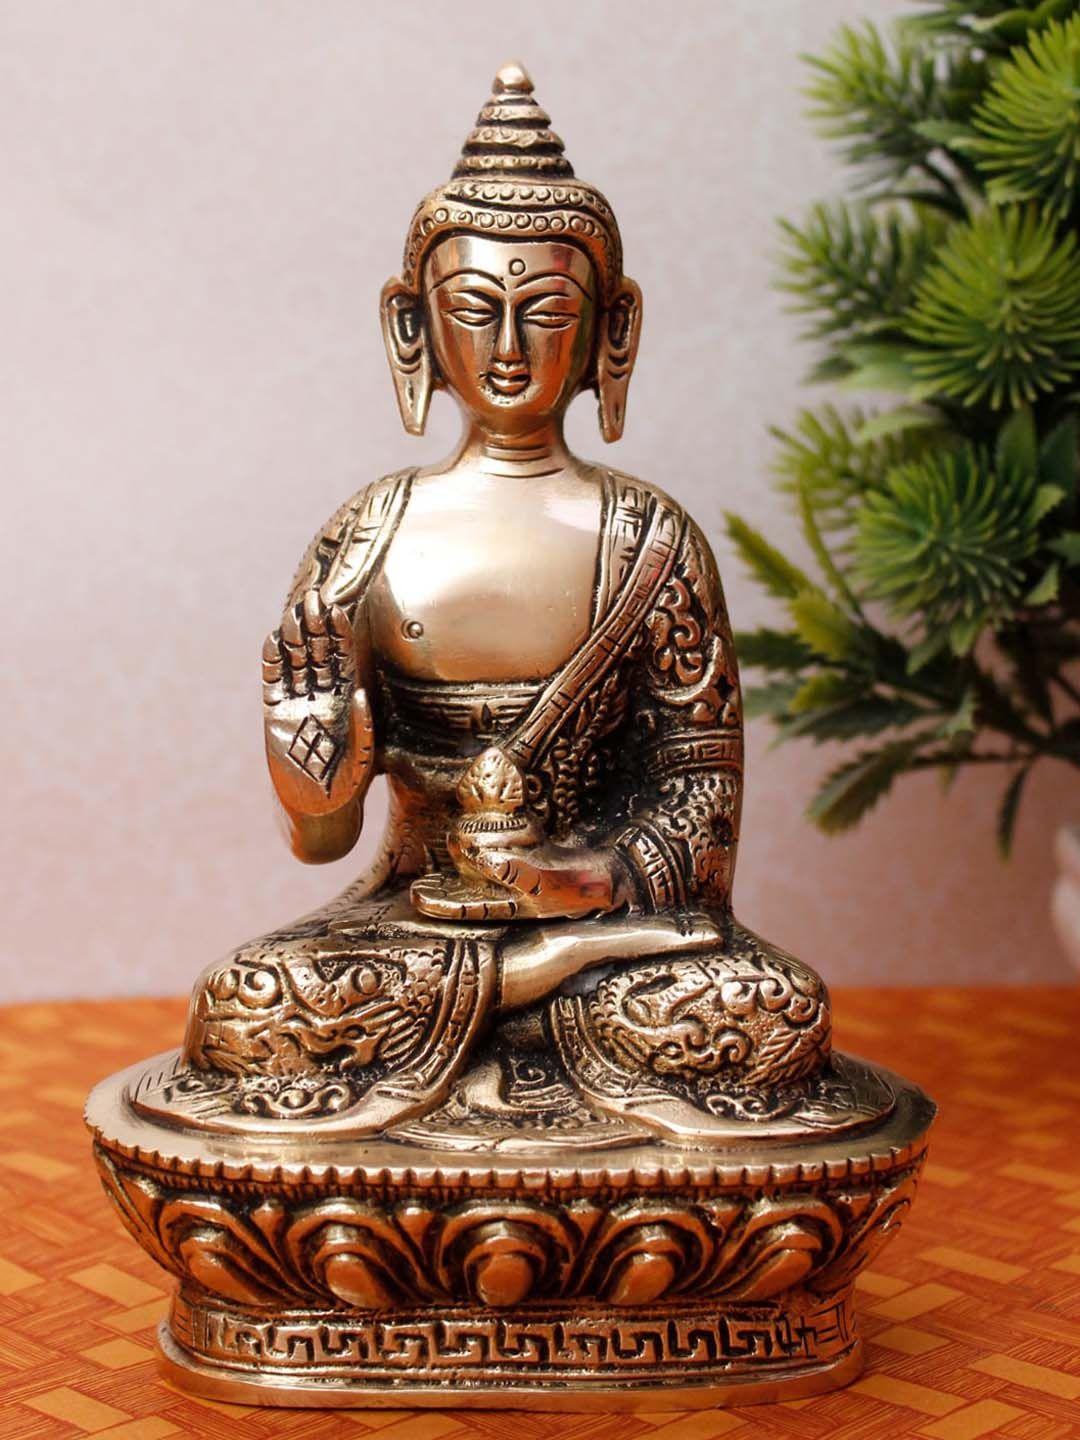 StatueStudio Gold-Toned Brass Buddha Statue Showpiece Price in India